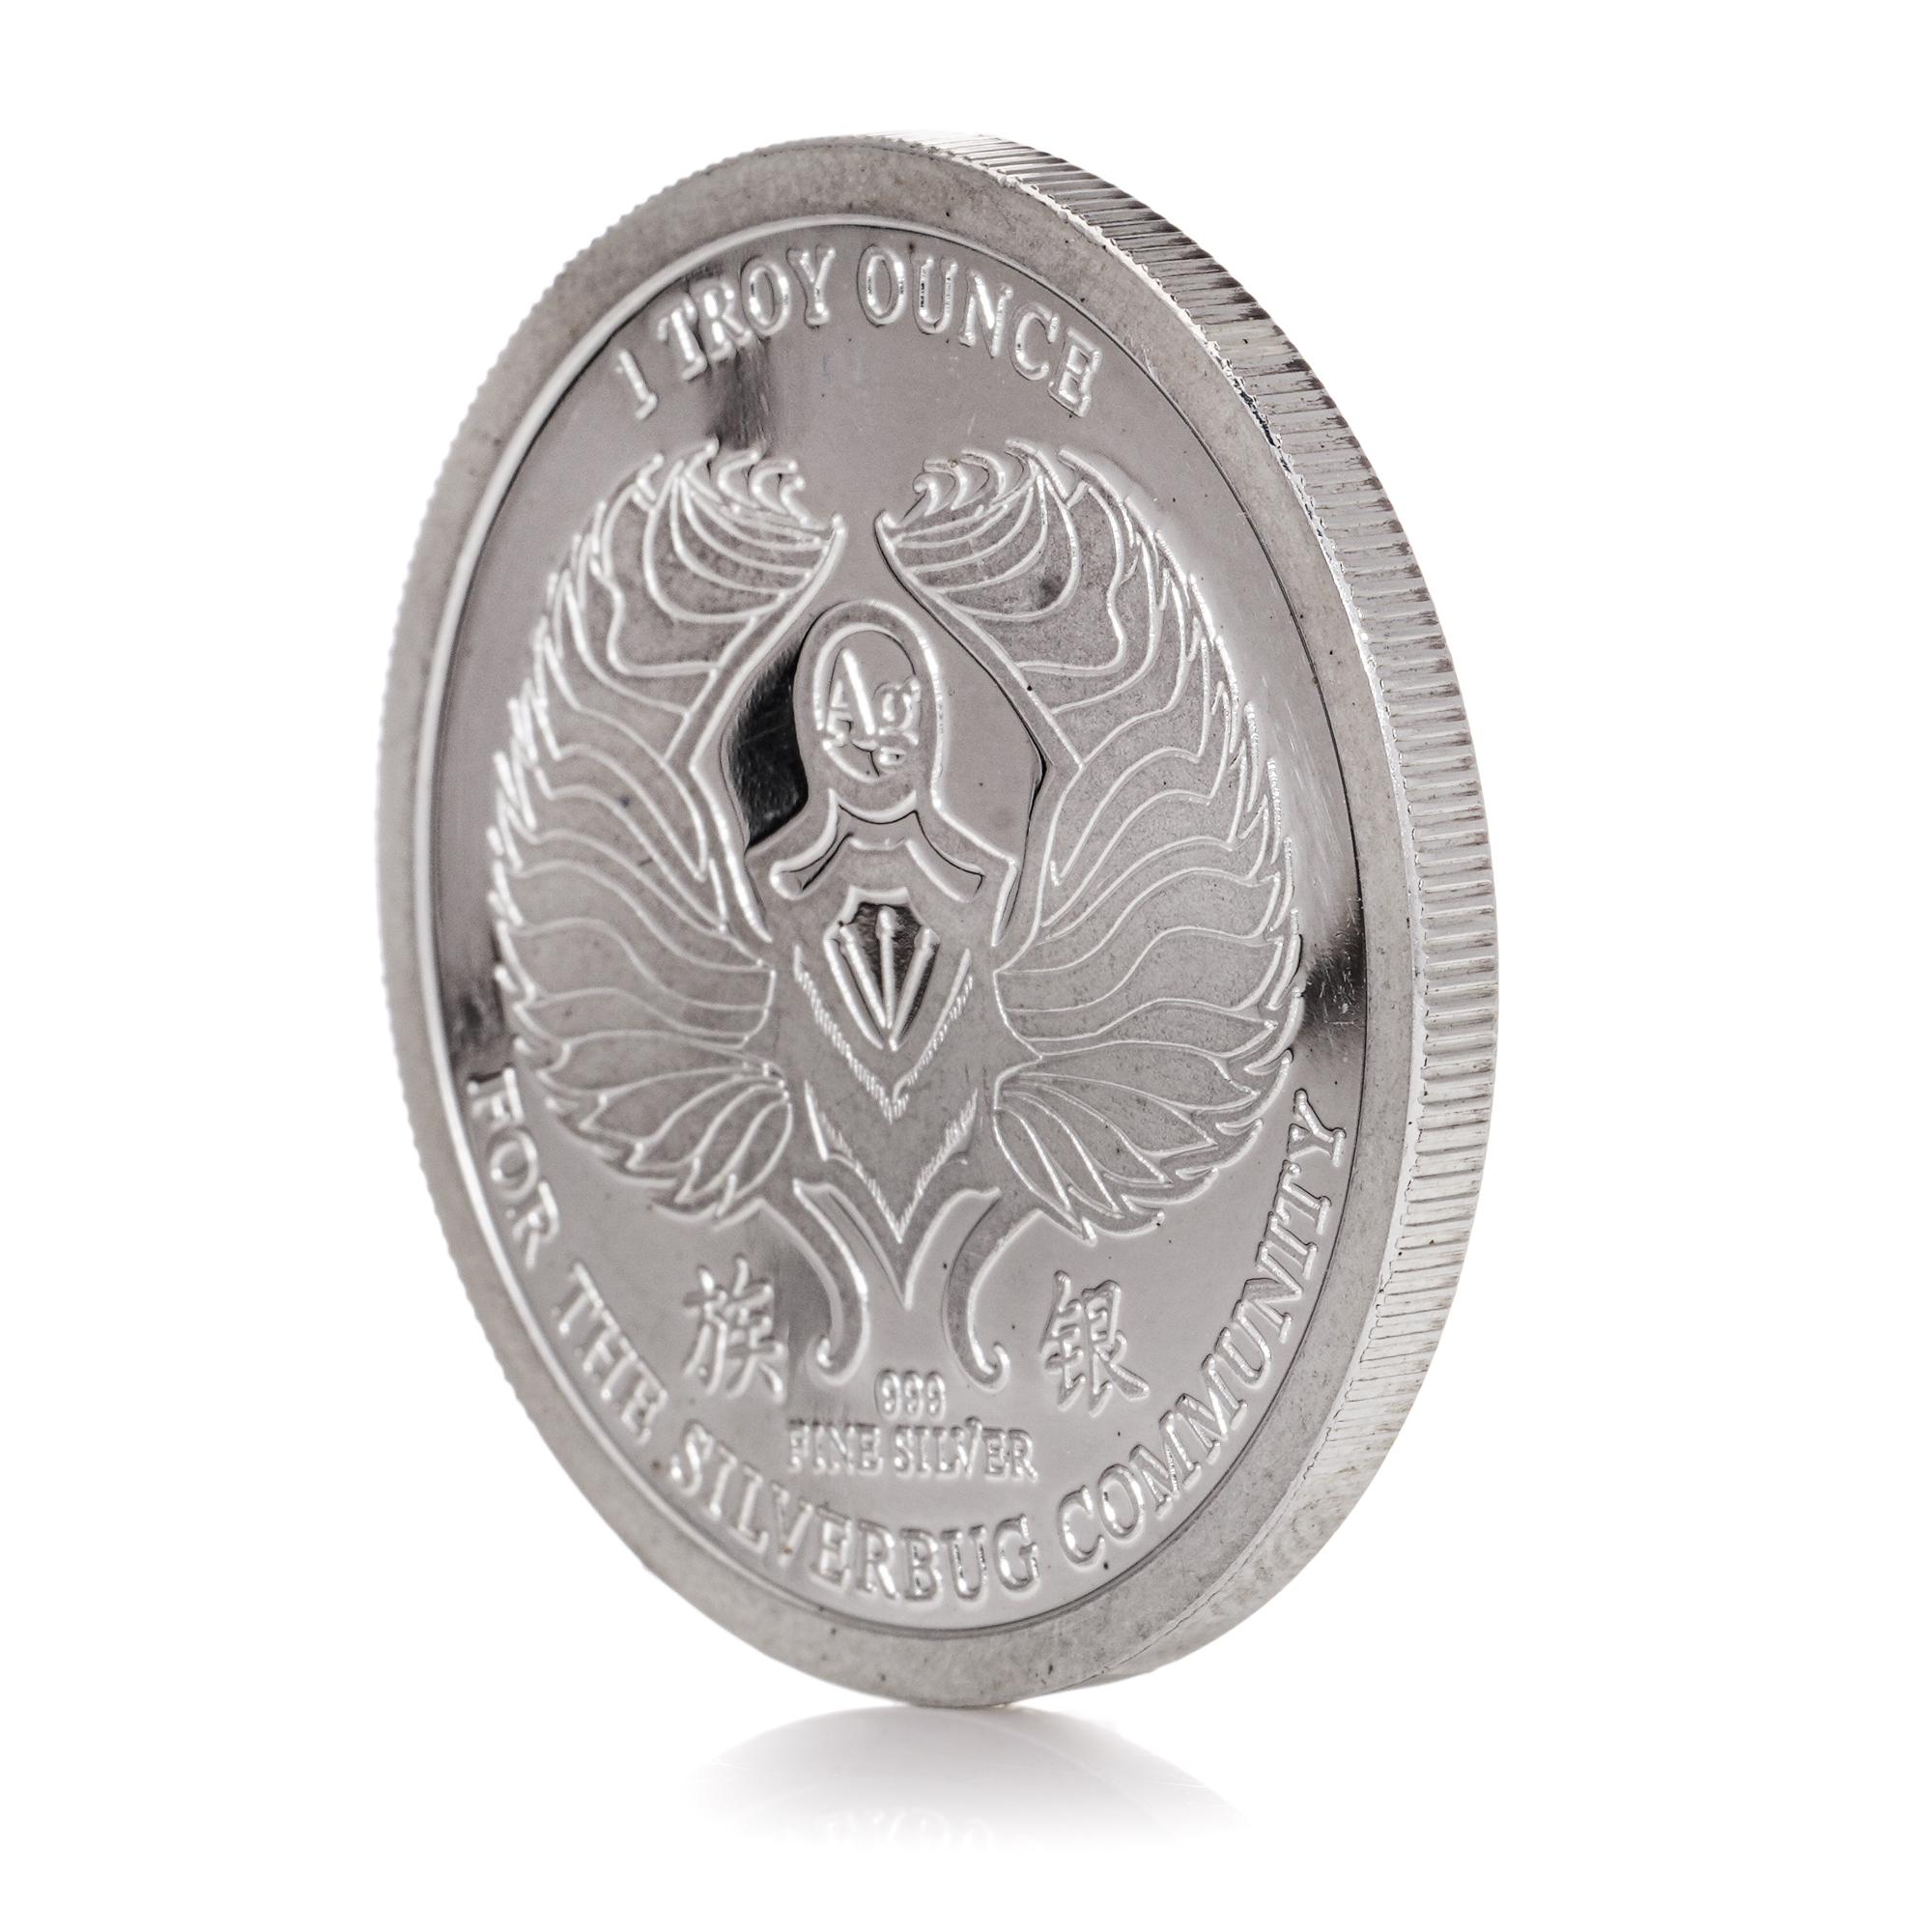 The 2014 1 oz Silberbug Commemorative Silbermünze .999 Silbermünze  (Nordamerikanisch) im Angebot